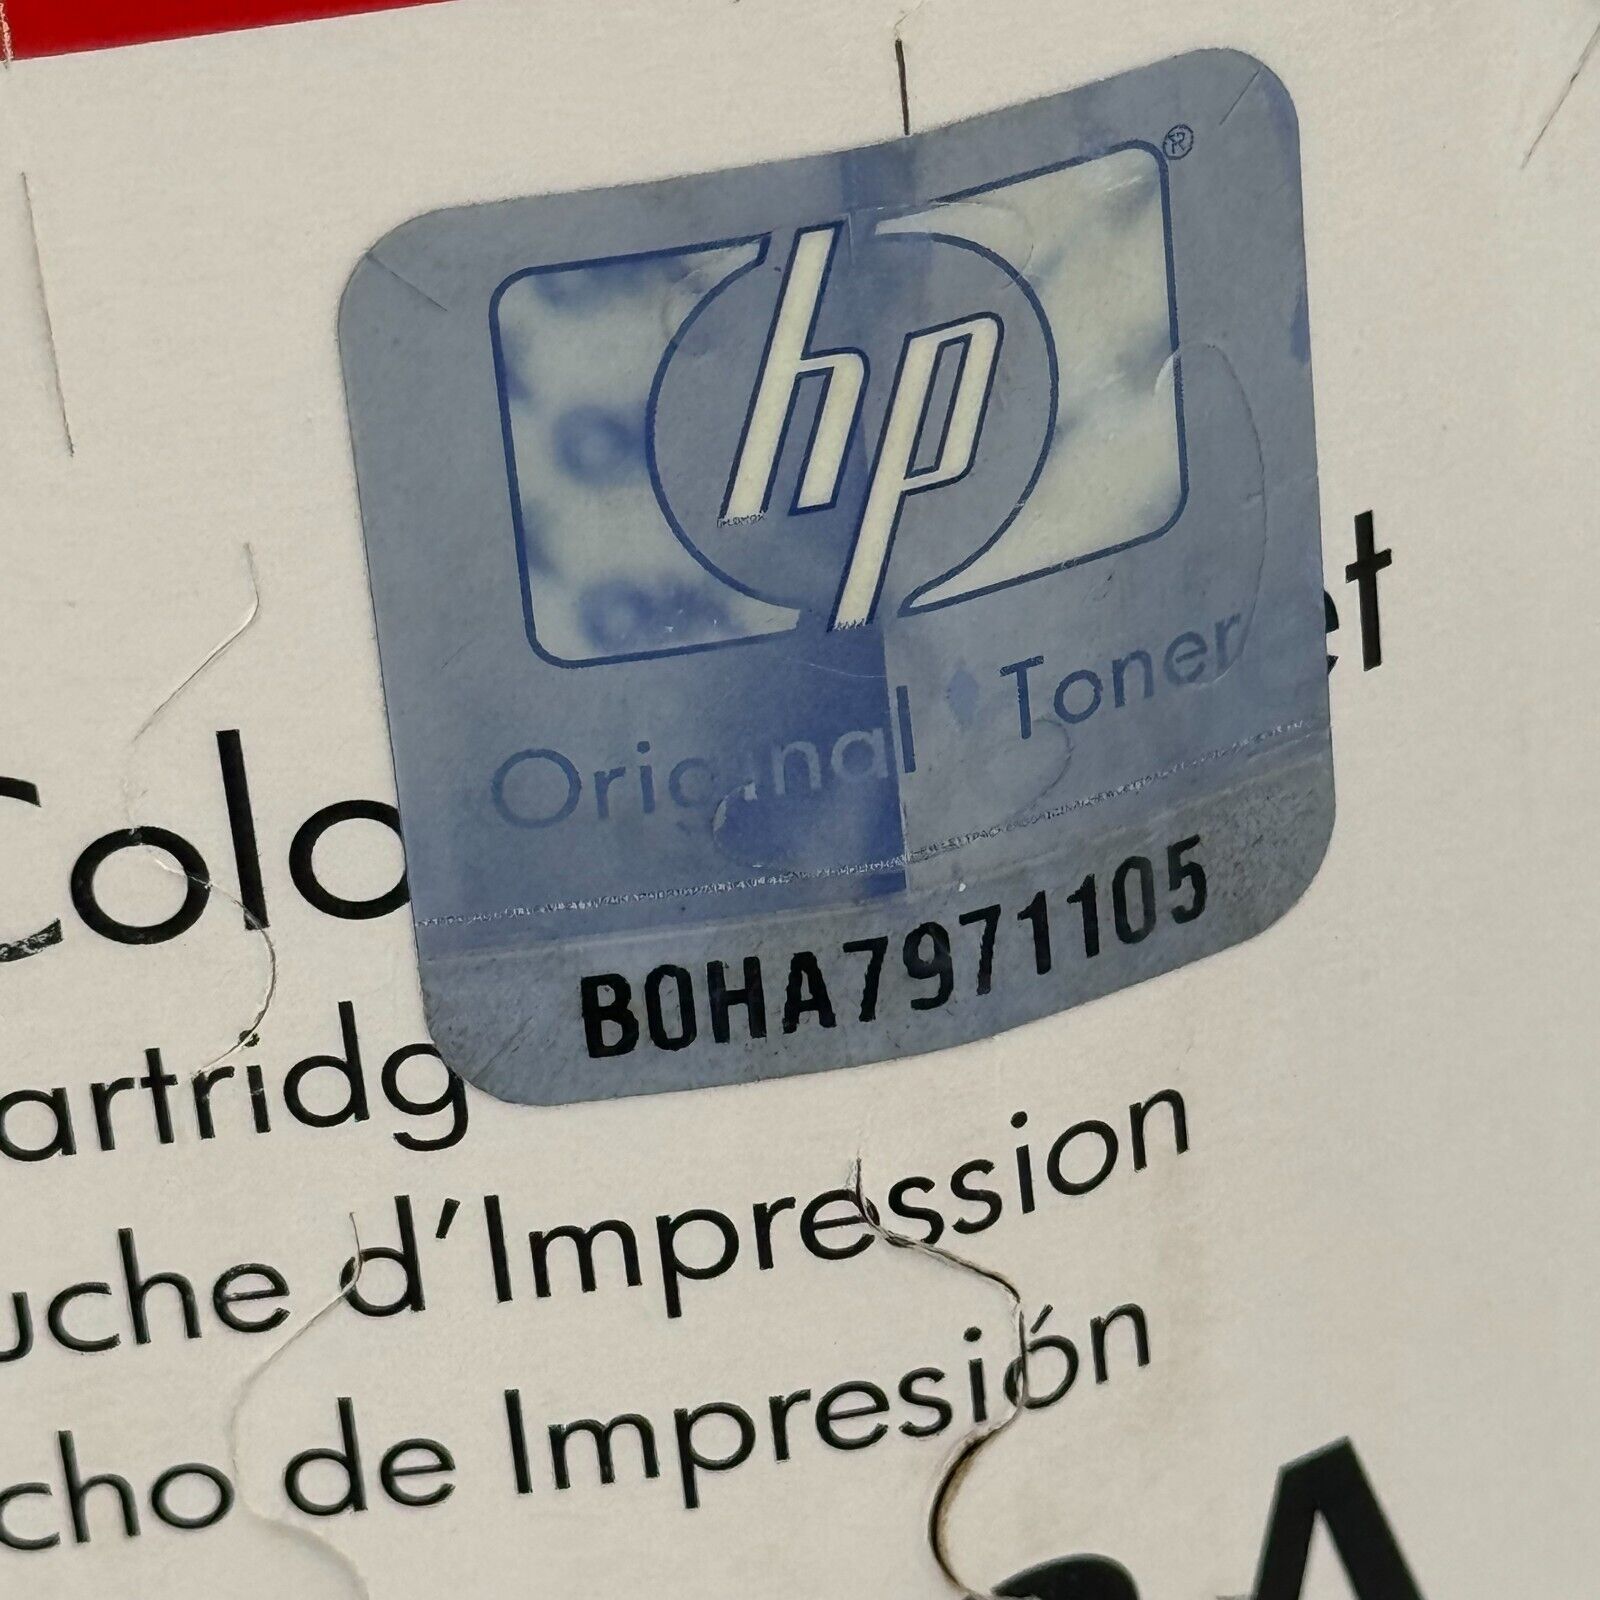 Genuine HP Q2682A Yellow Toner Cartridge New Sealed Printer OEM Replacement